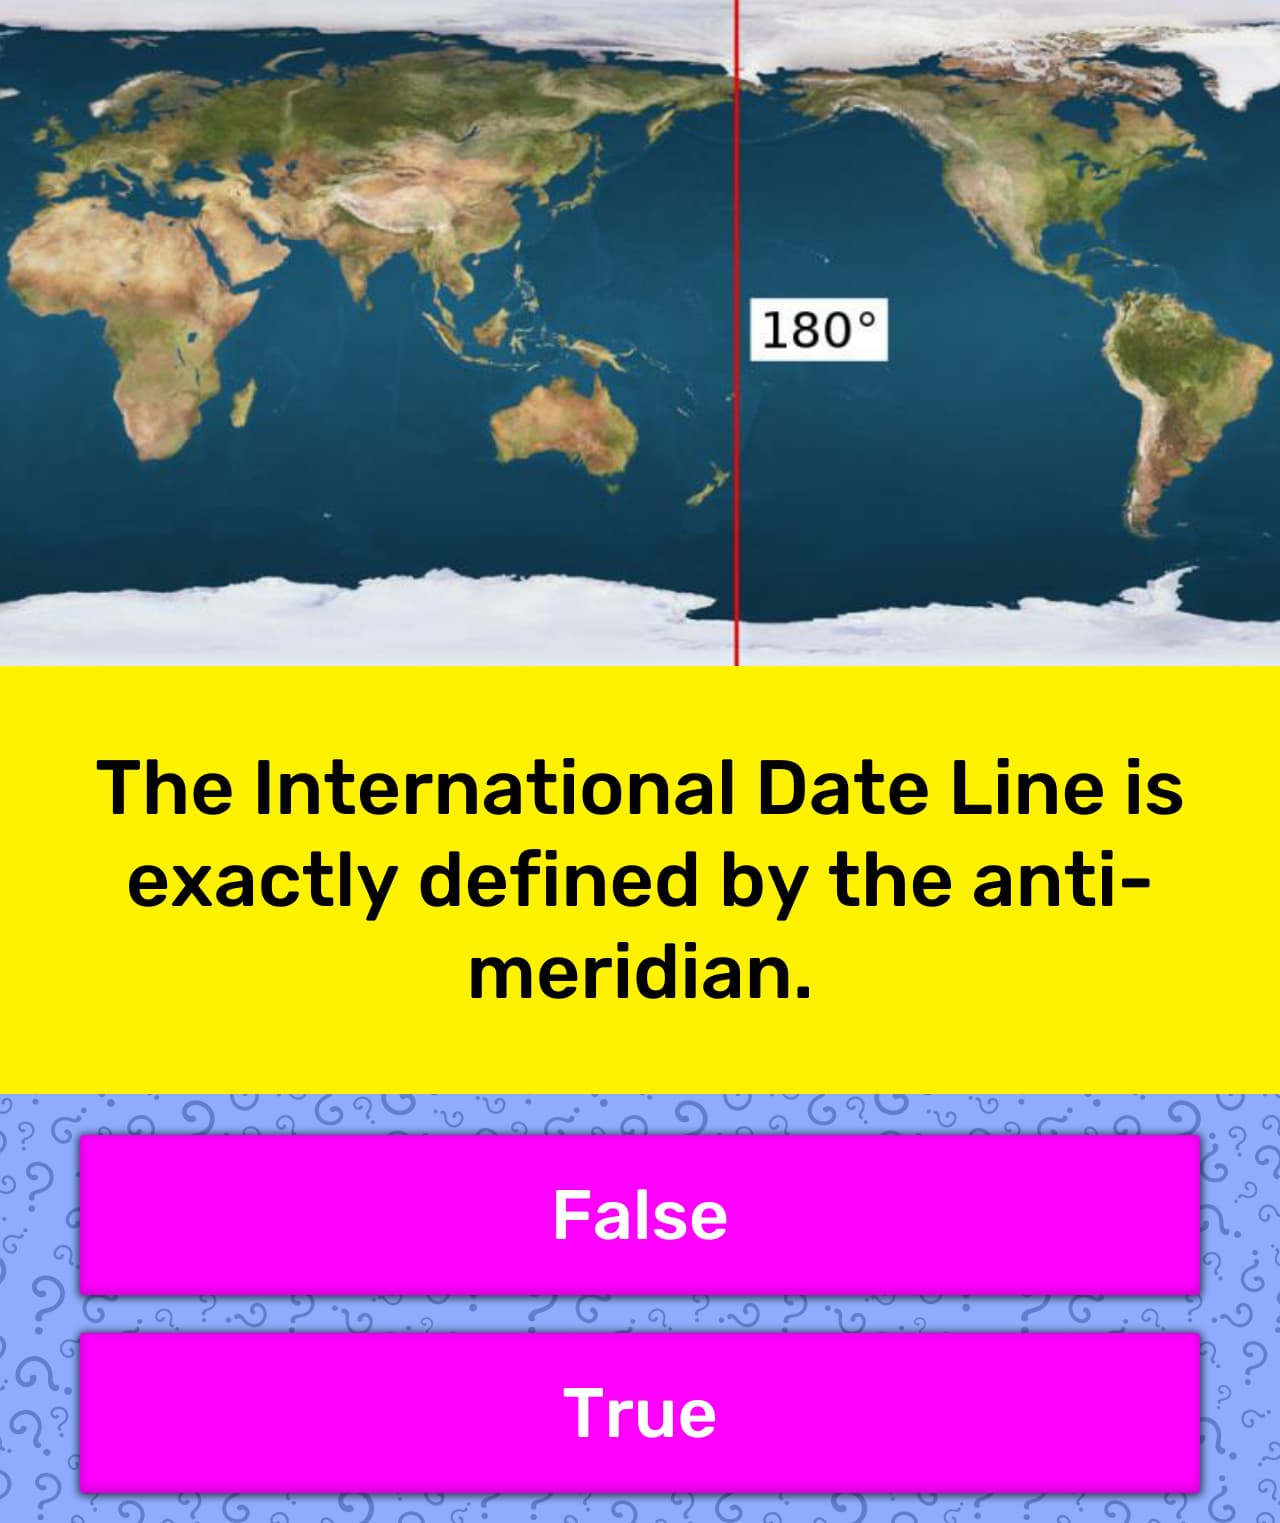 international date line